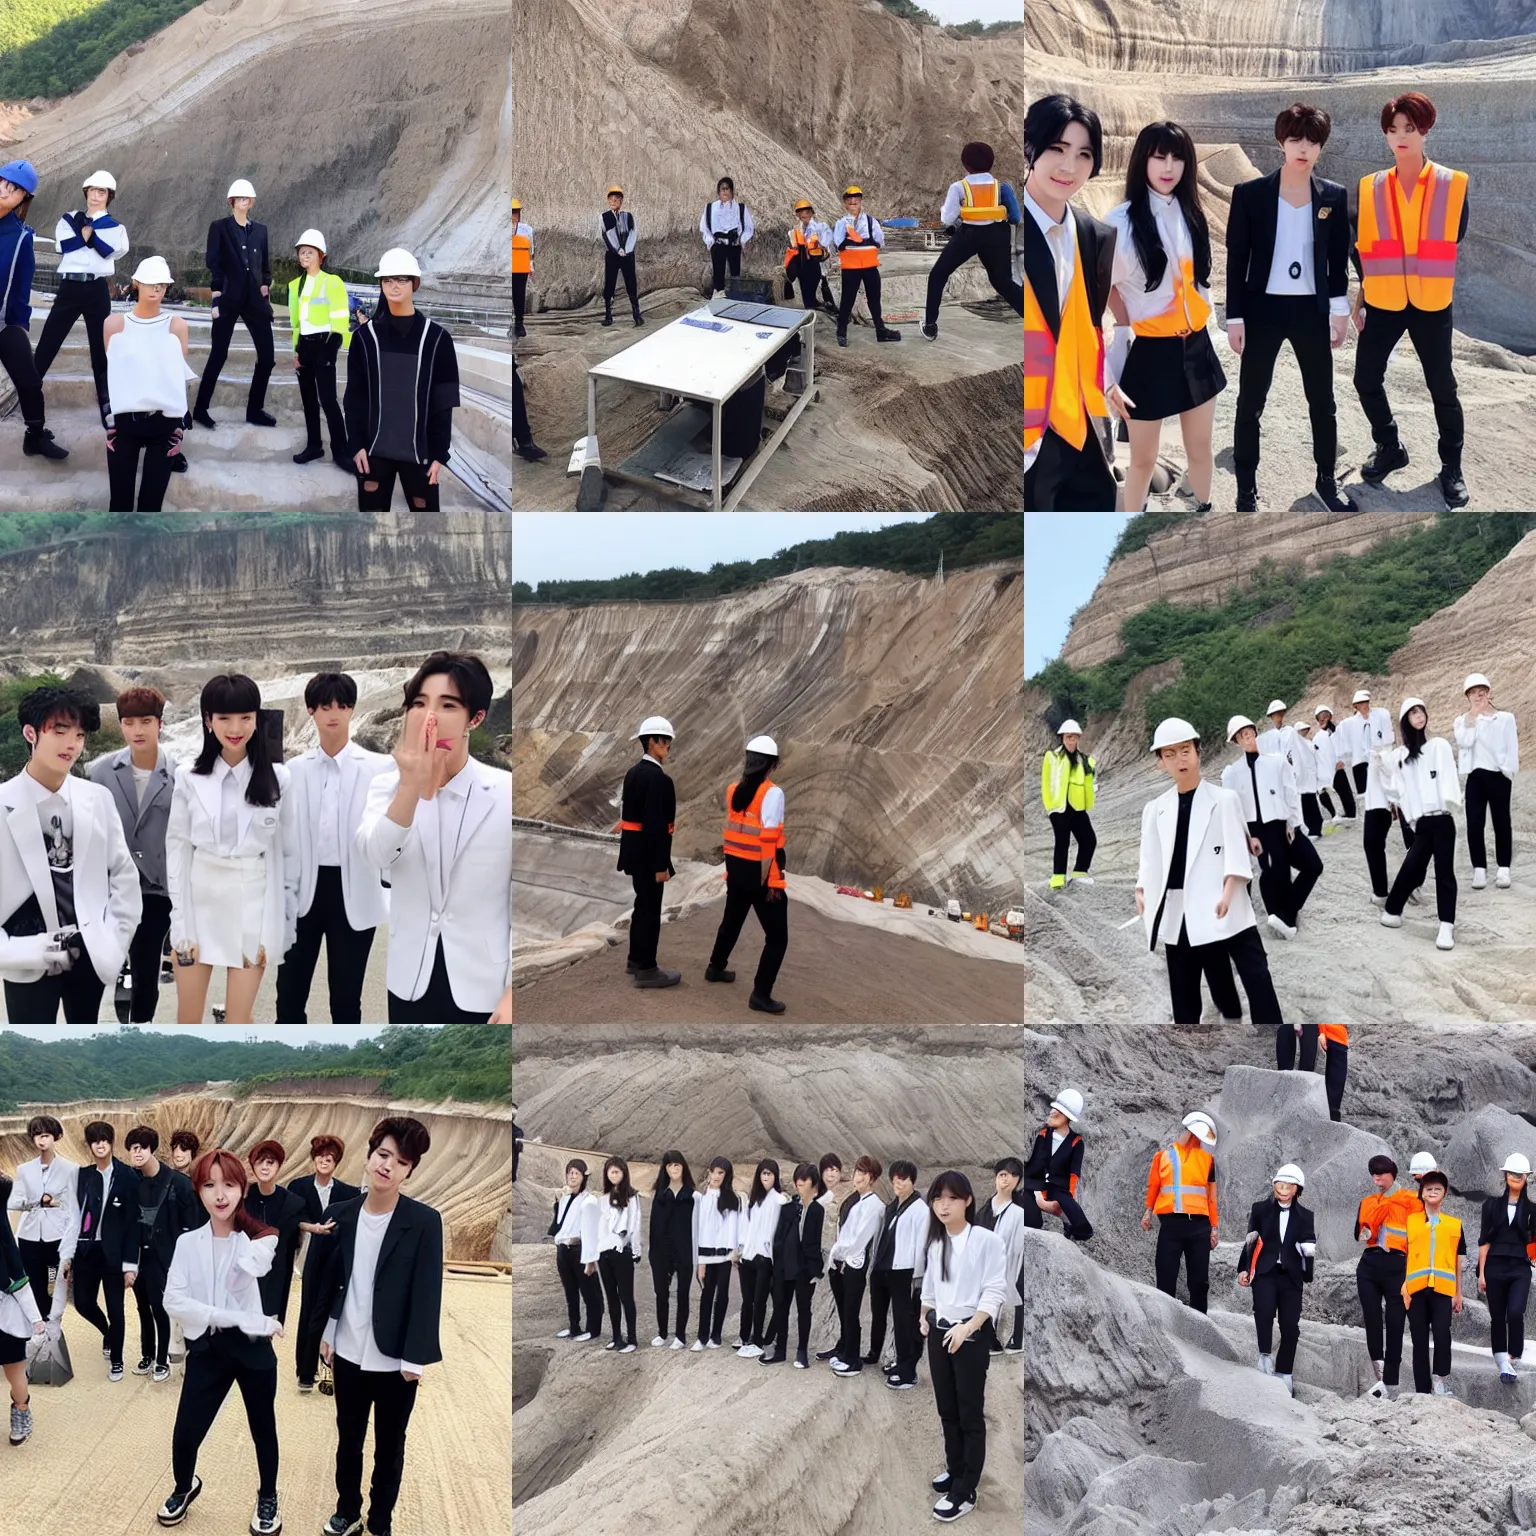 Prompt: k-pop idols in working attire working in a quarry